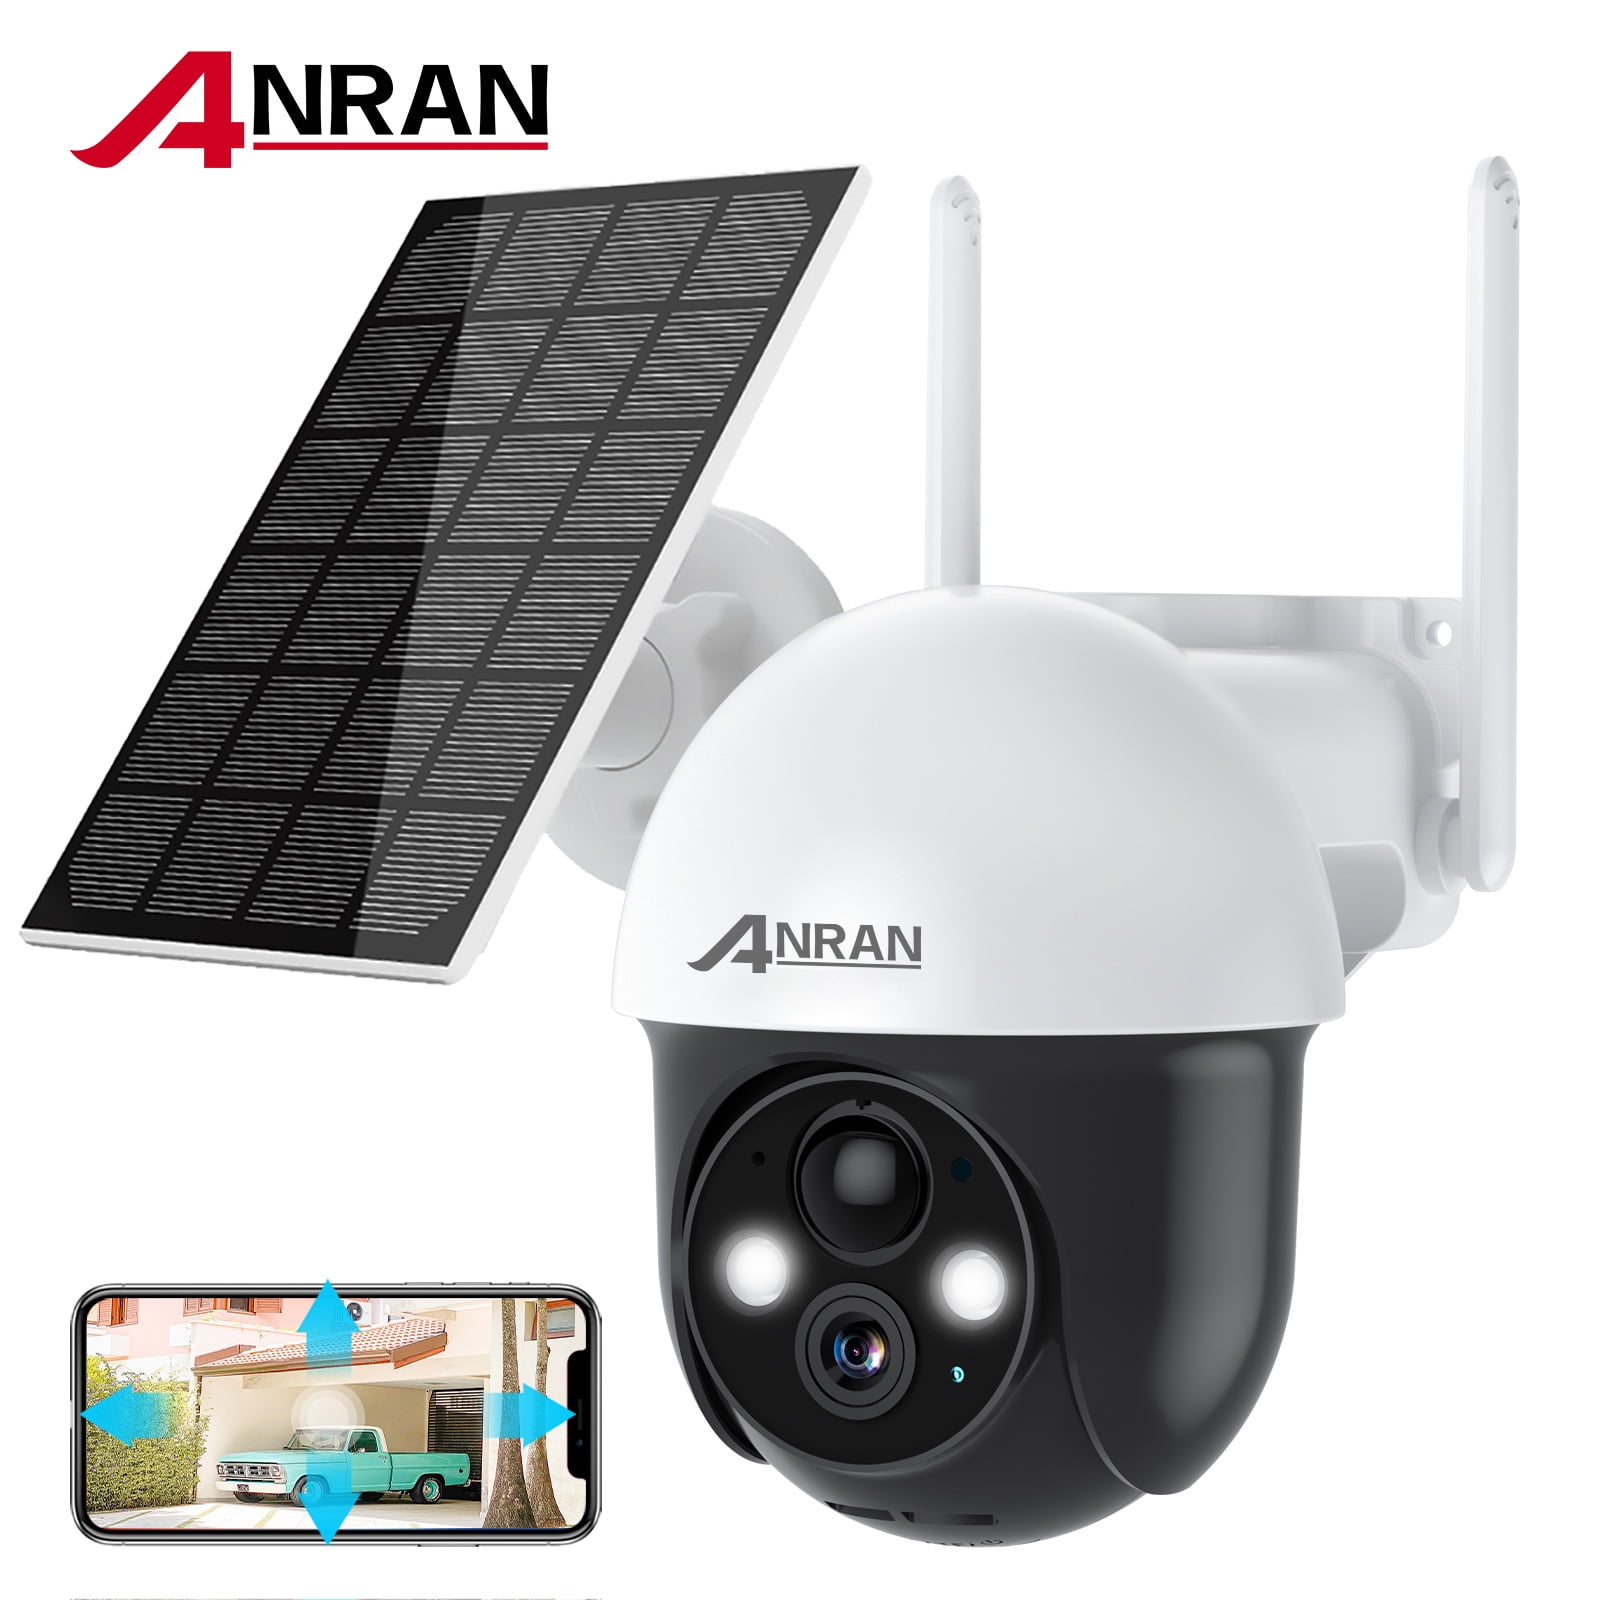 ANRAN Wireless CCTV Camera System HD 1080P 4 Channel Recorder IB3 ANRAN NEW All Metal 